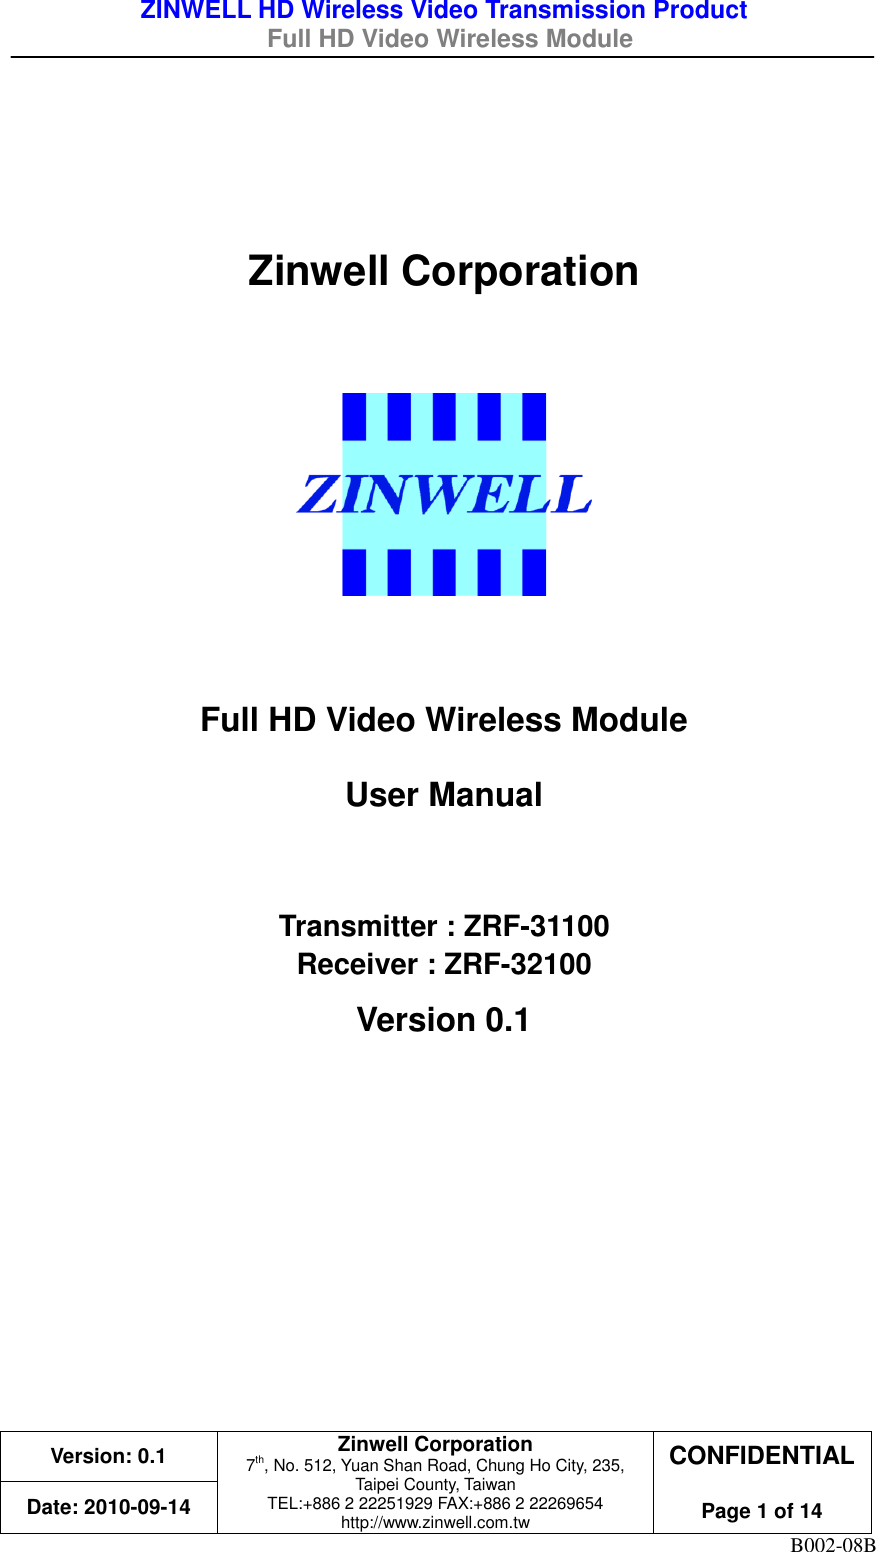 ZINWELL HD Wireless Video Transmission Product   Full HD Video Wireless Module    Version: 0.1 Zinwell Corporation 7th, No. 512, Yuan Shan Road, Chung Ho City, 235, Taipei County, Taiwan TEL:+886 2 22251929 FAX:+886 2 22269654 http://www.zinwell.com.tw CONFIDENTIAL  Page 1 of 14 Date: 2010-09-14 B002-08B   Zinwell Corporation     Full HD Video Wireless Module User Manual  Transmitter : ZRF-31100 Receiver : ZRF-32100 Version 0.1    